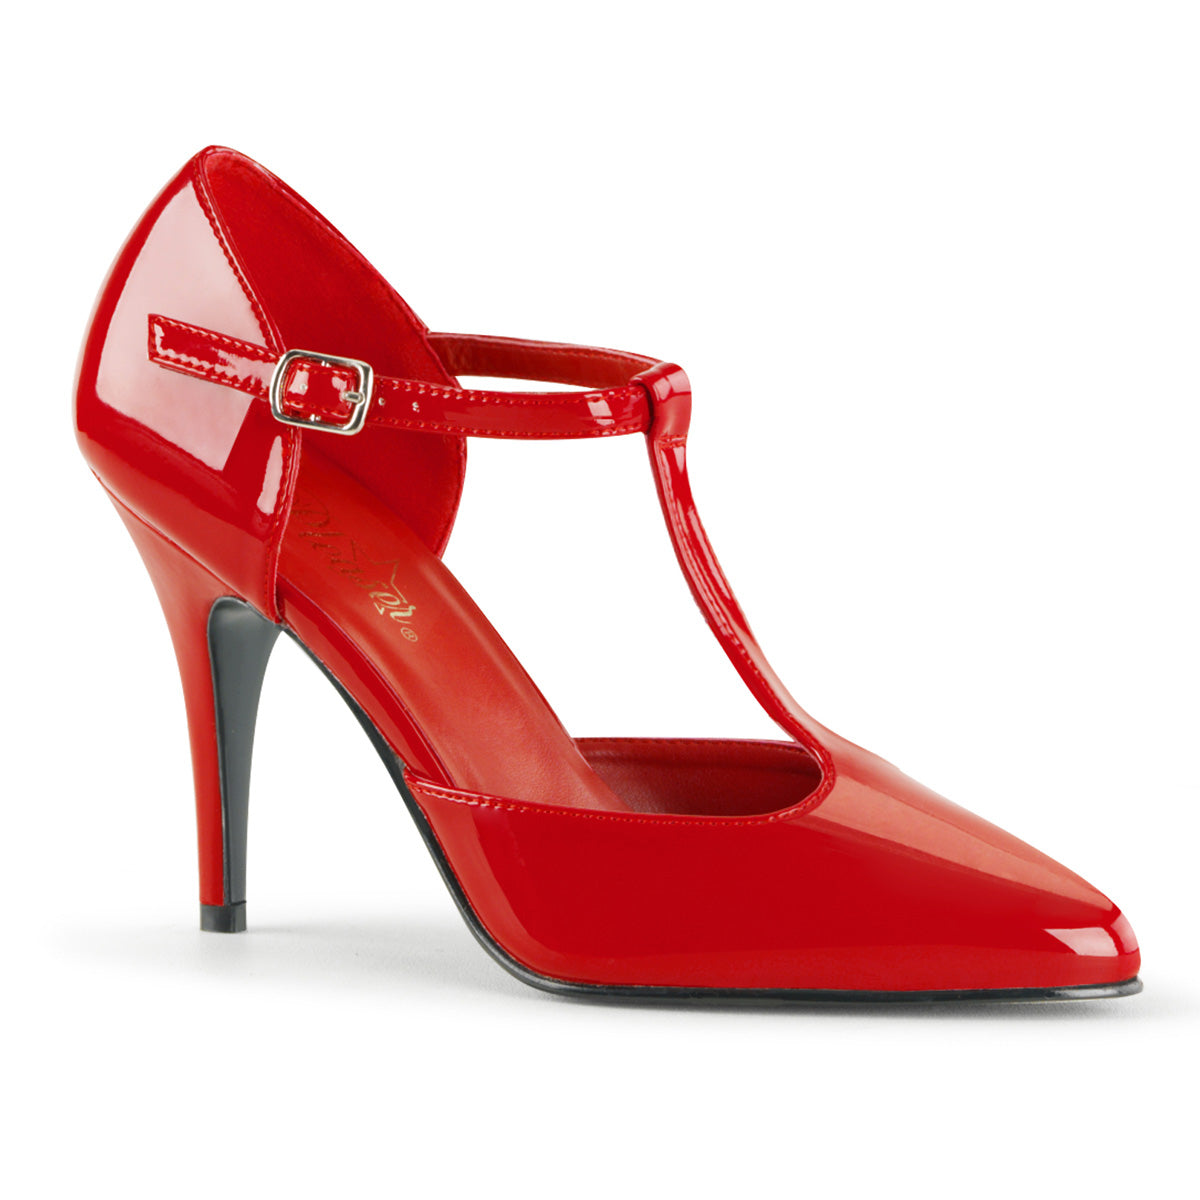 VANITY-415 Pleaser Shoes 4 Inch Heel Red Fetish Footwear-Pleaser- Sexy Shoes